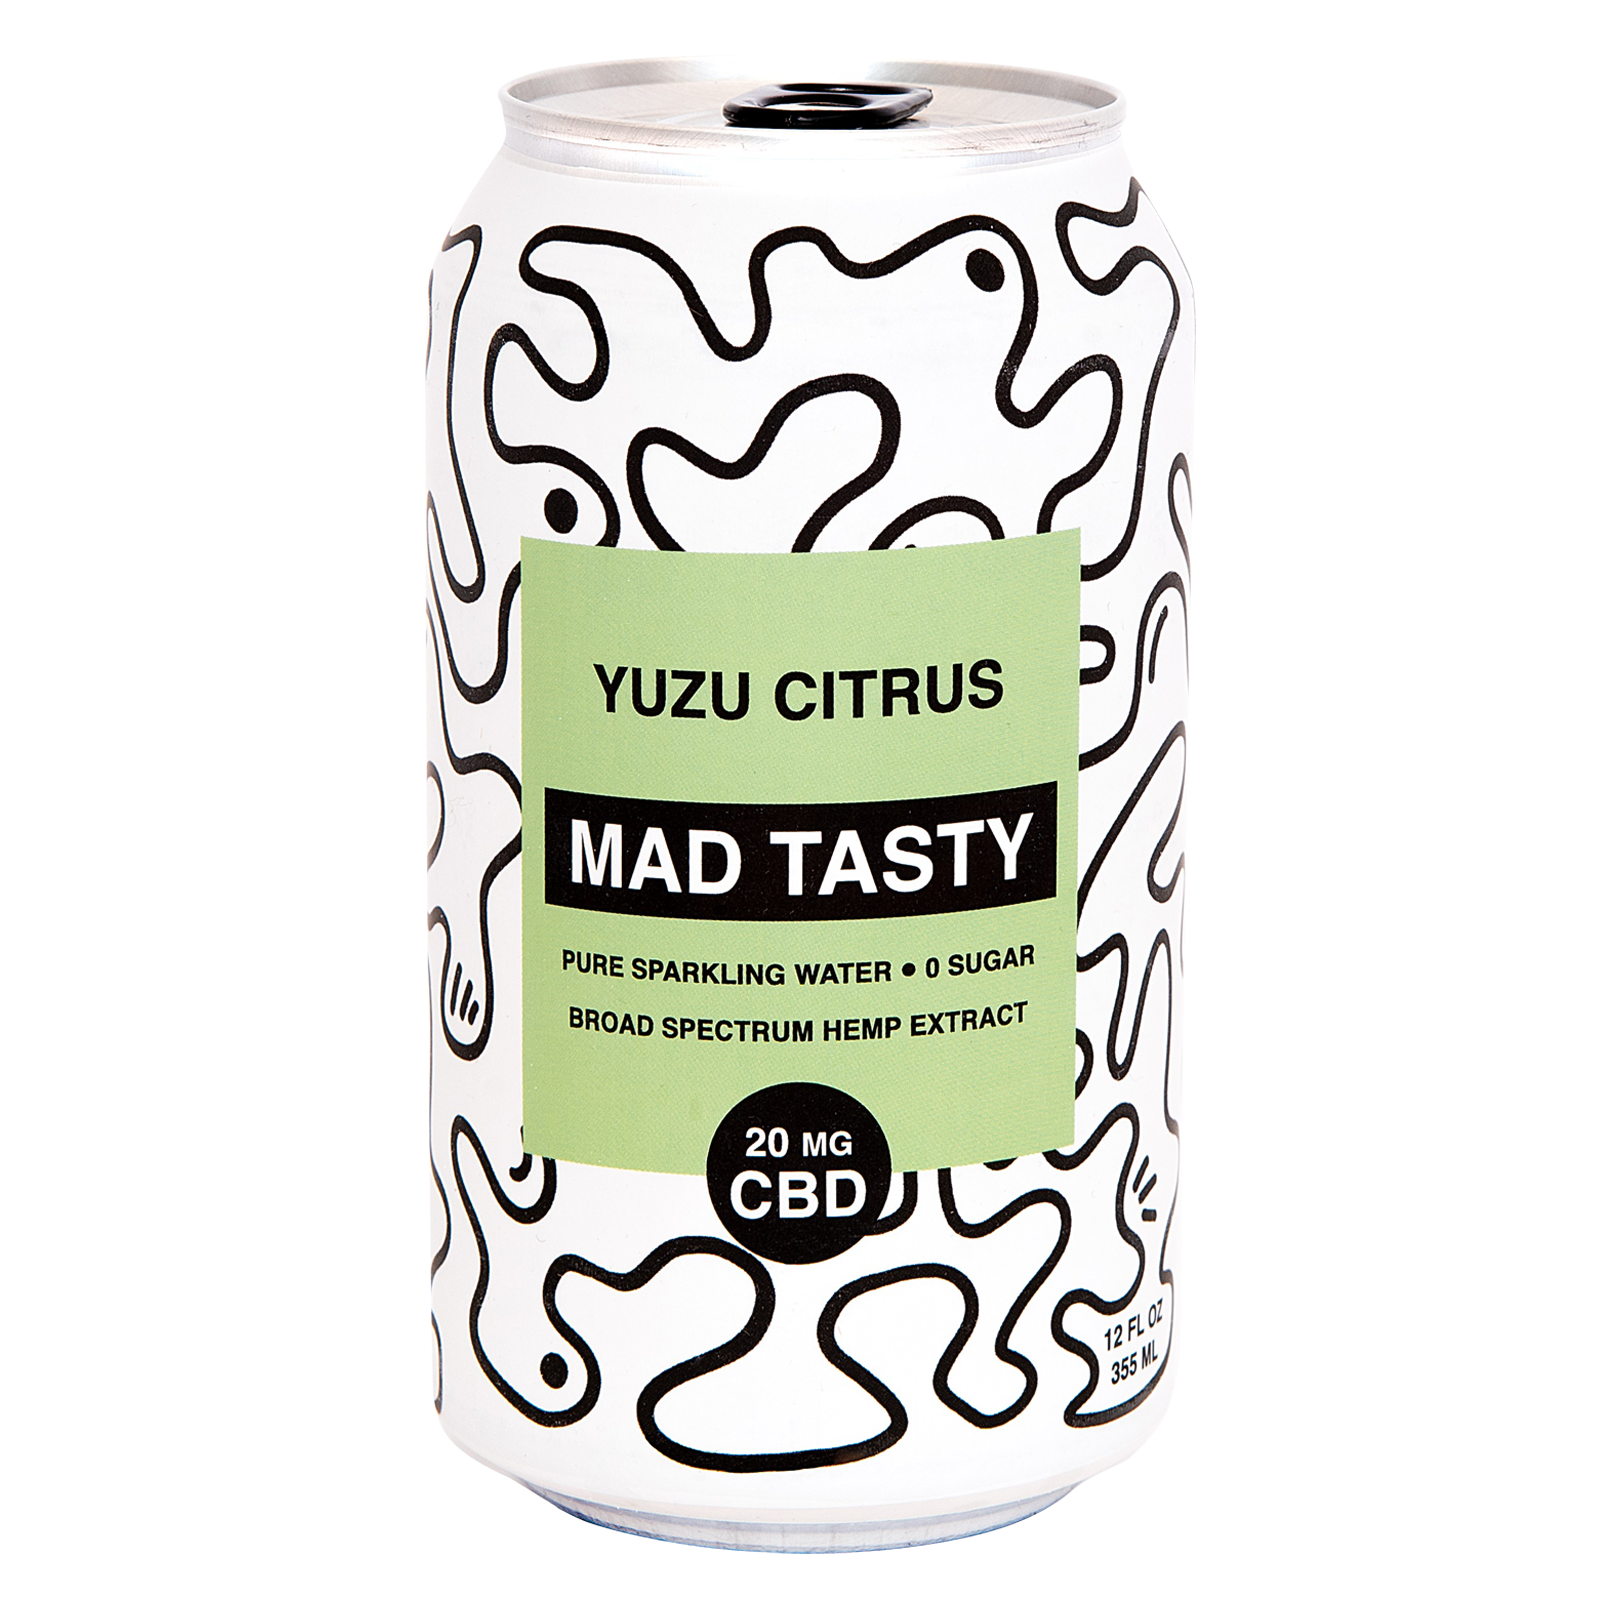 Mad Tasty Yuzu Citrus CBD Sparkling Water 12oz Can 20mg